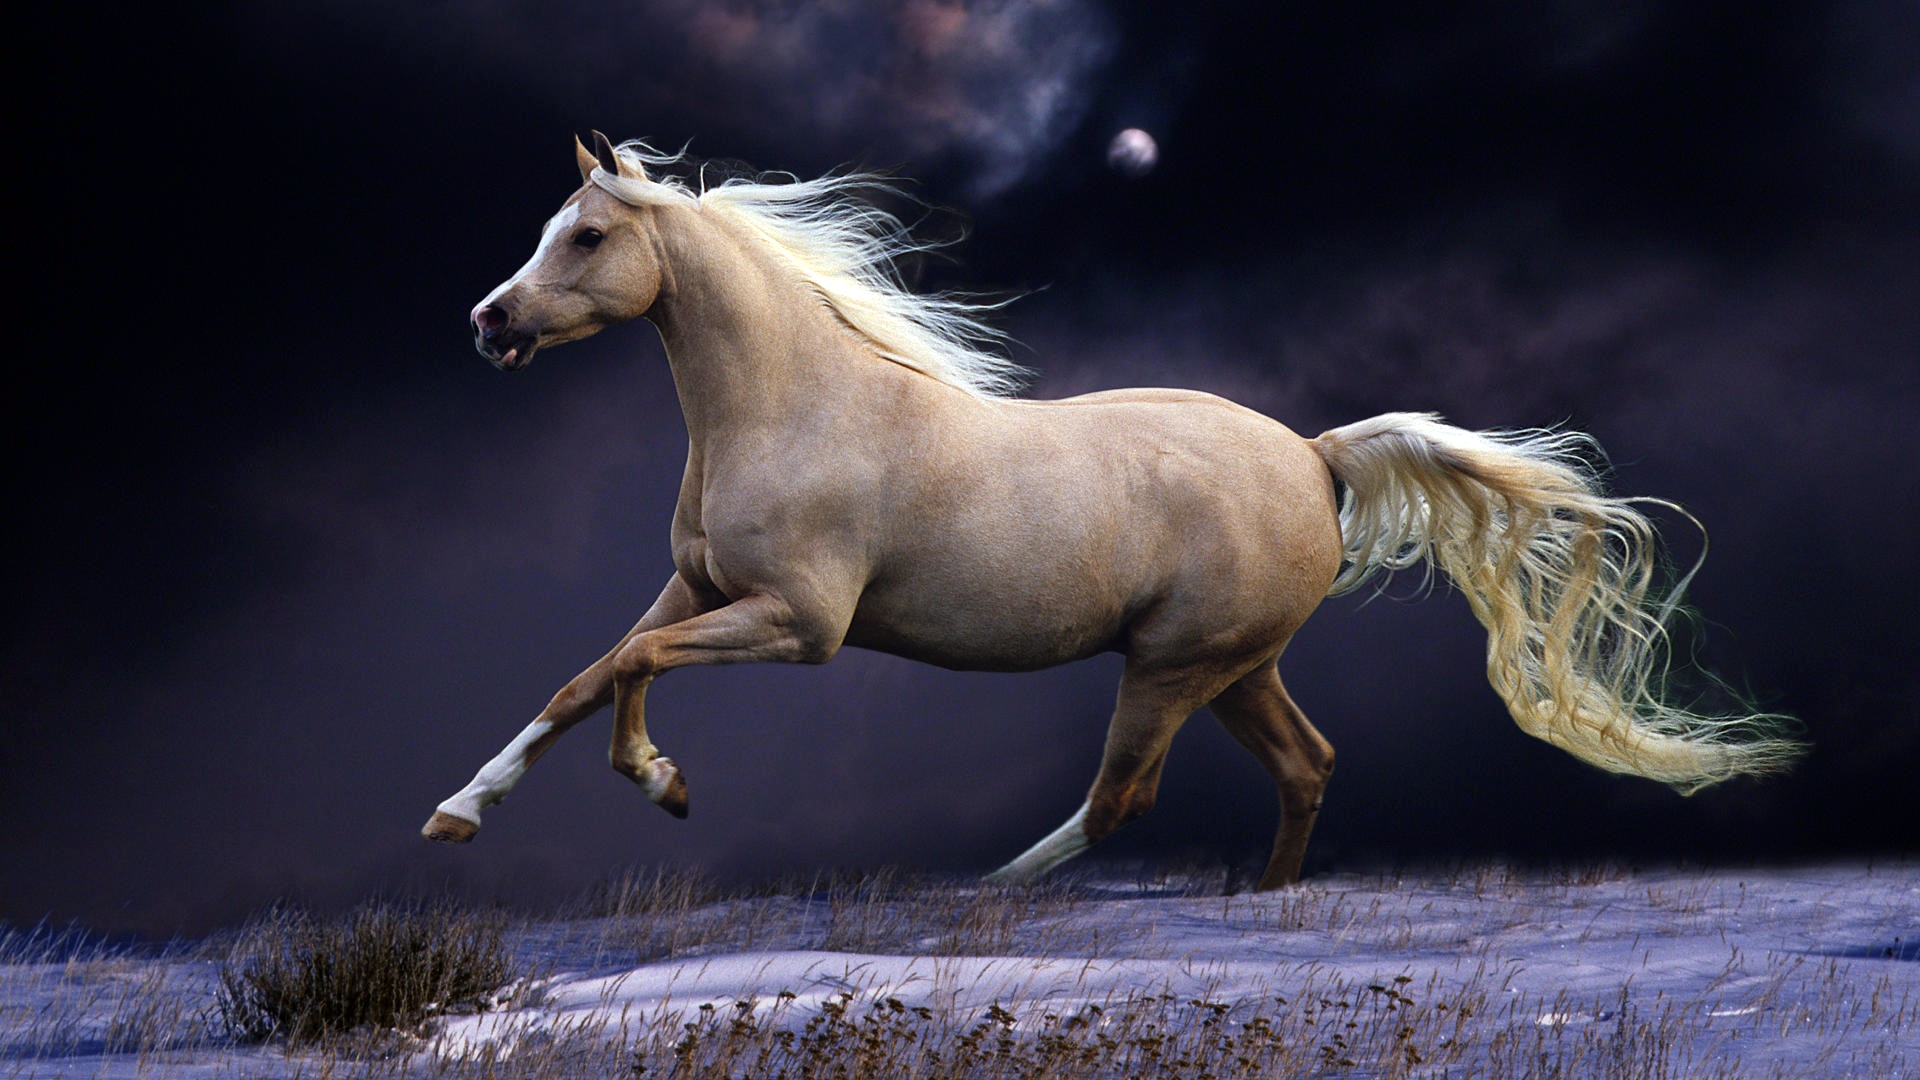 Beautiful-Horse-Running-Horses Photography | Internet Vibes